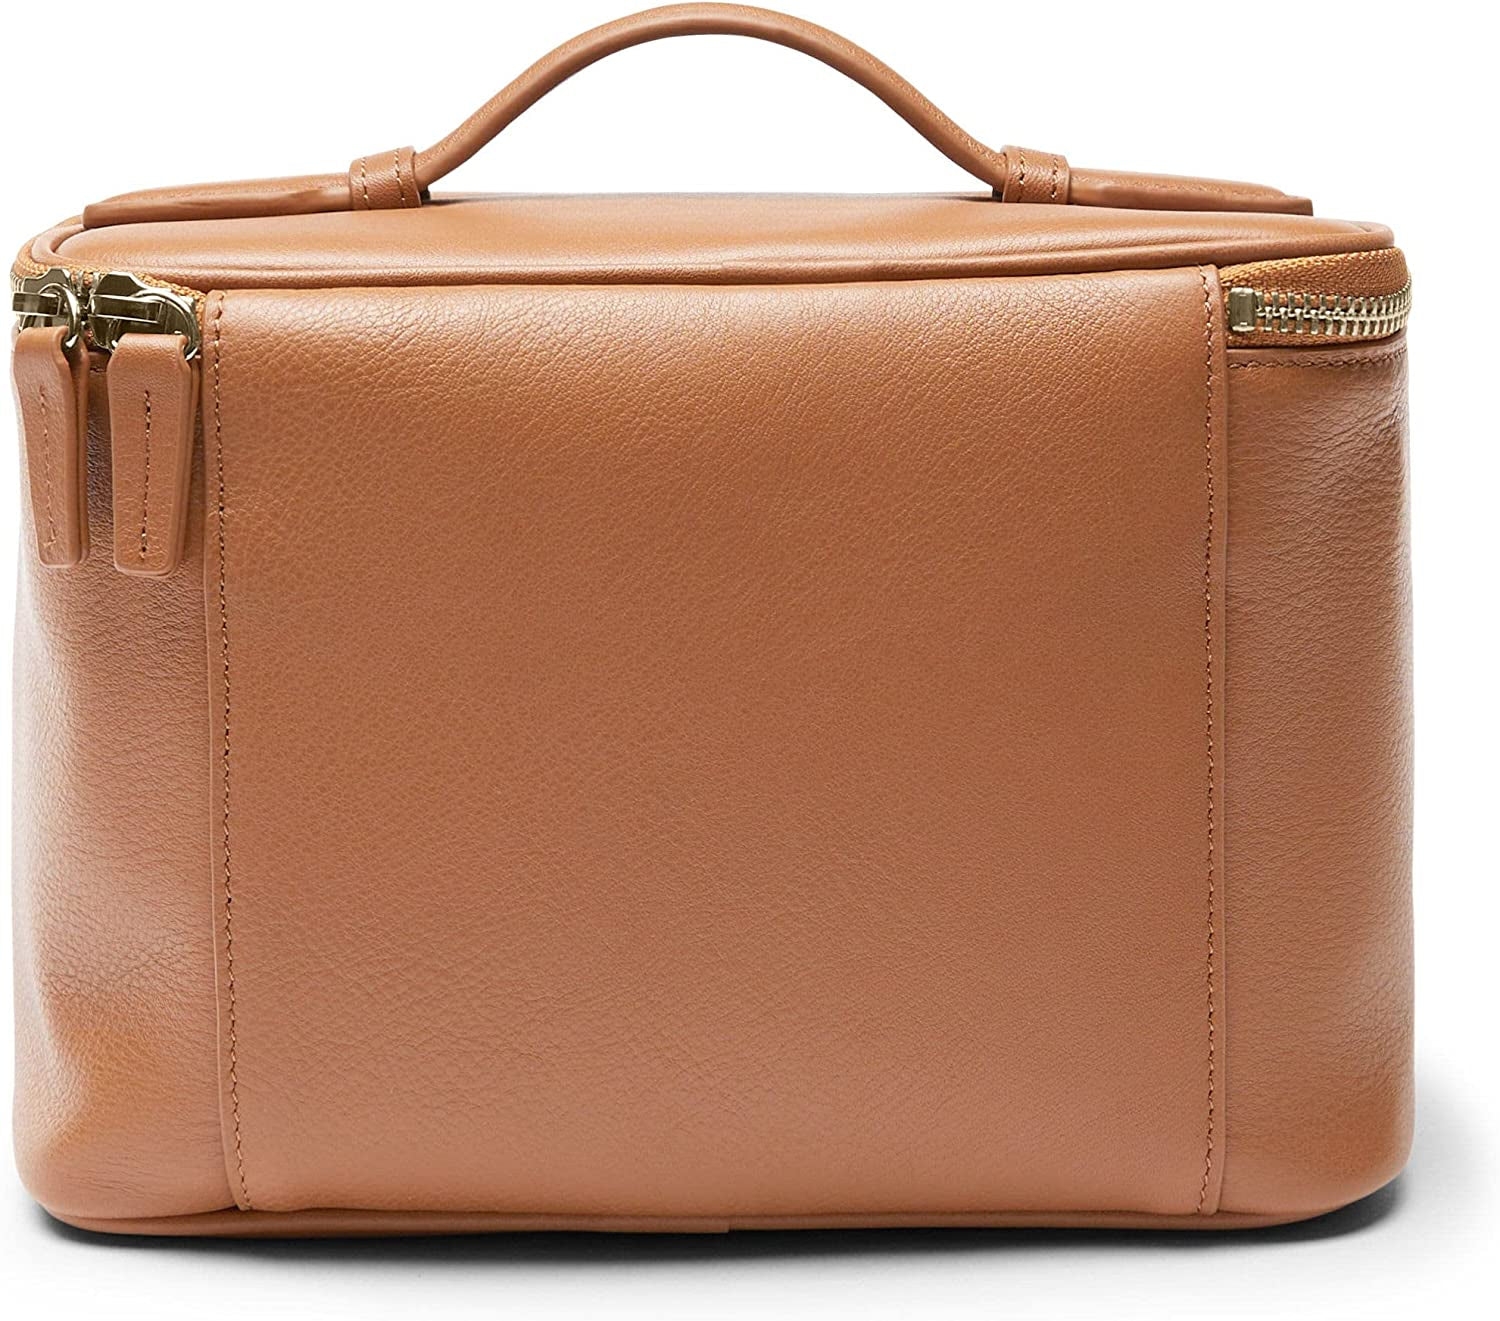 Leatherology Cognac Top Handle Medium Train Case Cosmetic Makeup Bag Organizer for Women